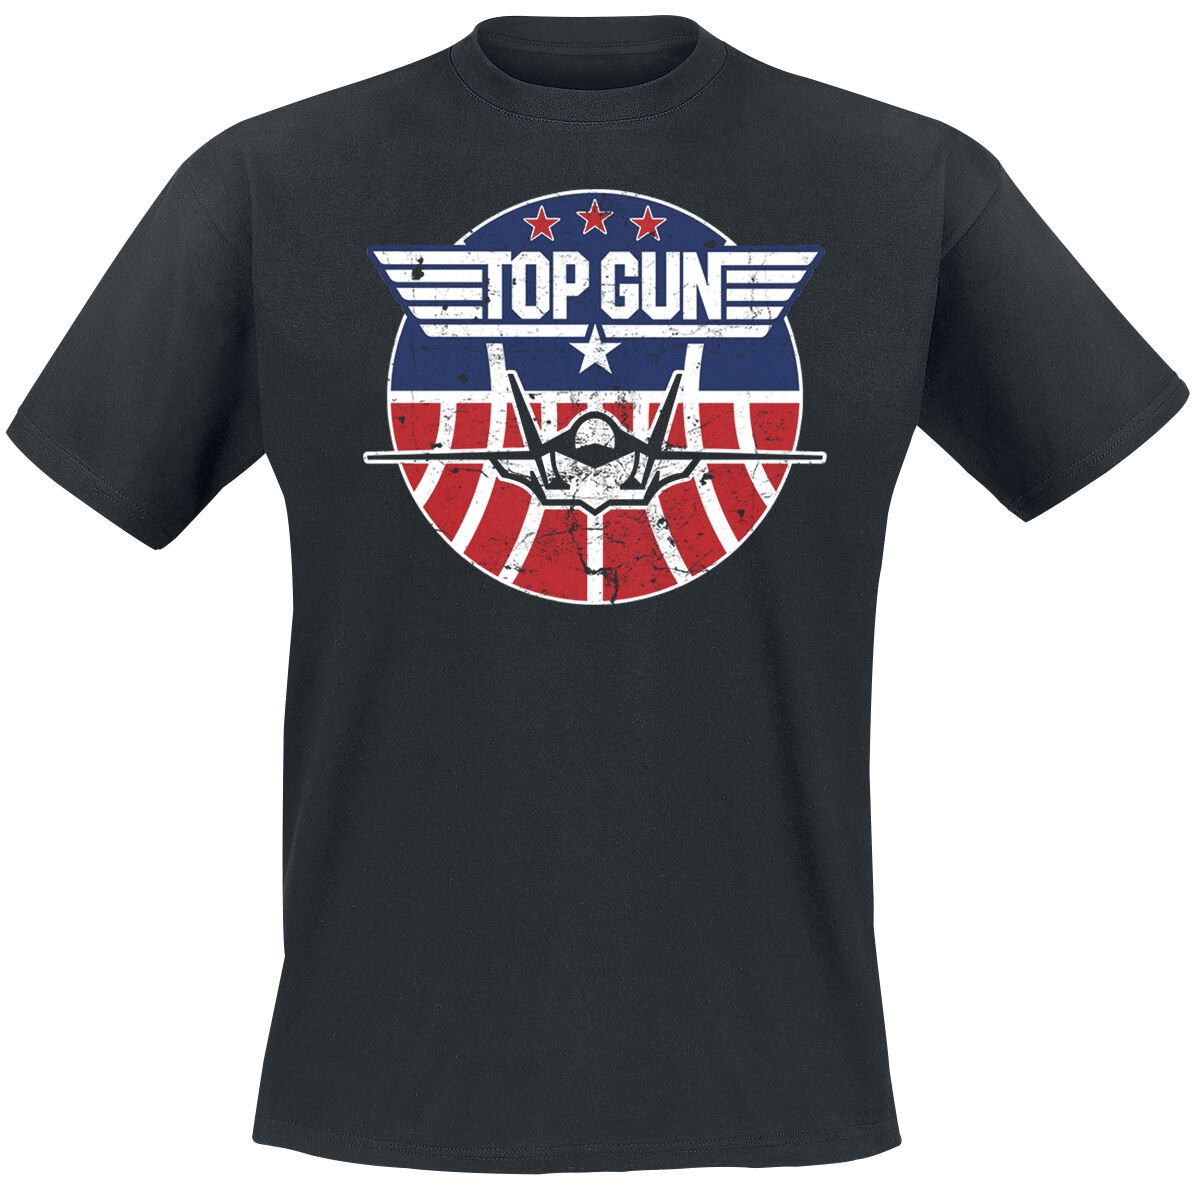 Top Gun T-Shirt - Maverick - Tomcat - S bis 5XL - für Männer - Größe S - schwarz  - Lizenzierter Fanartikel